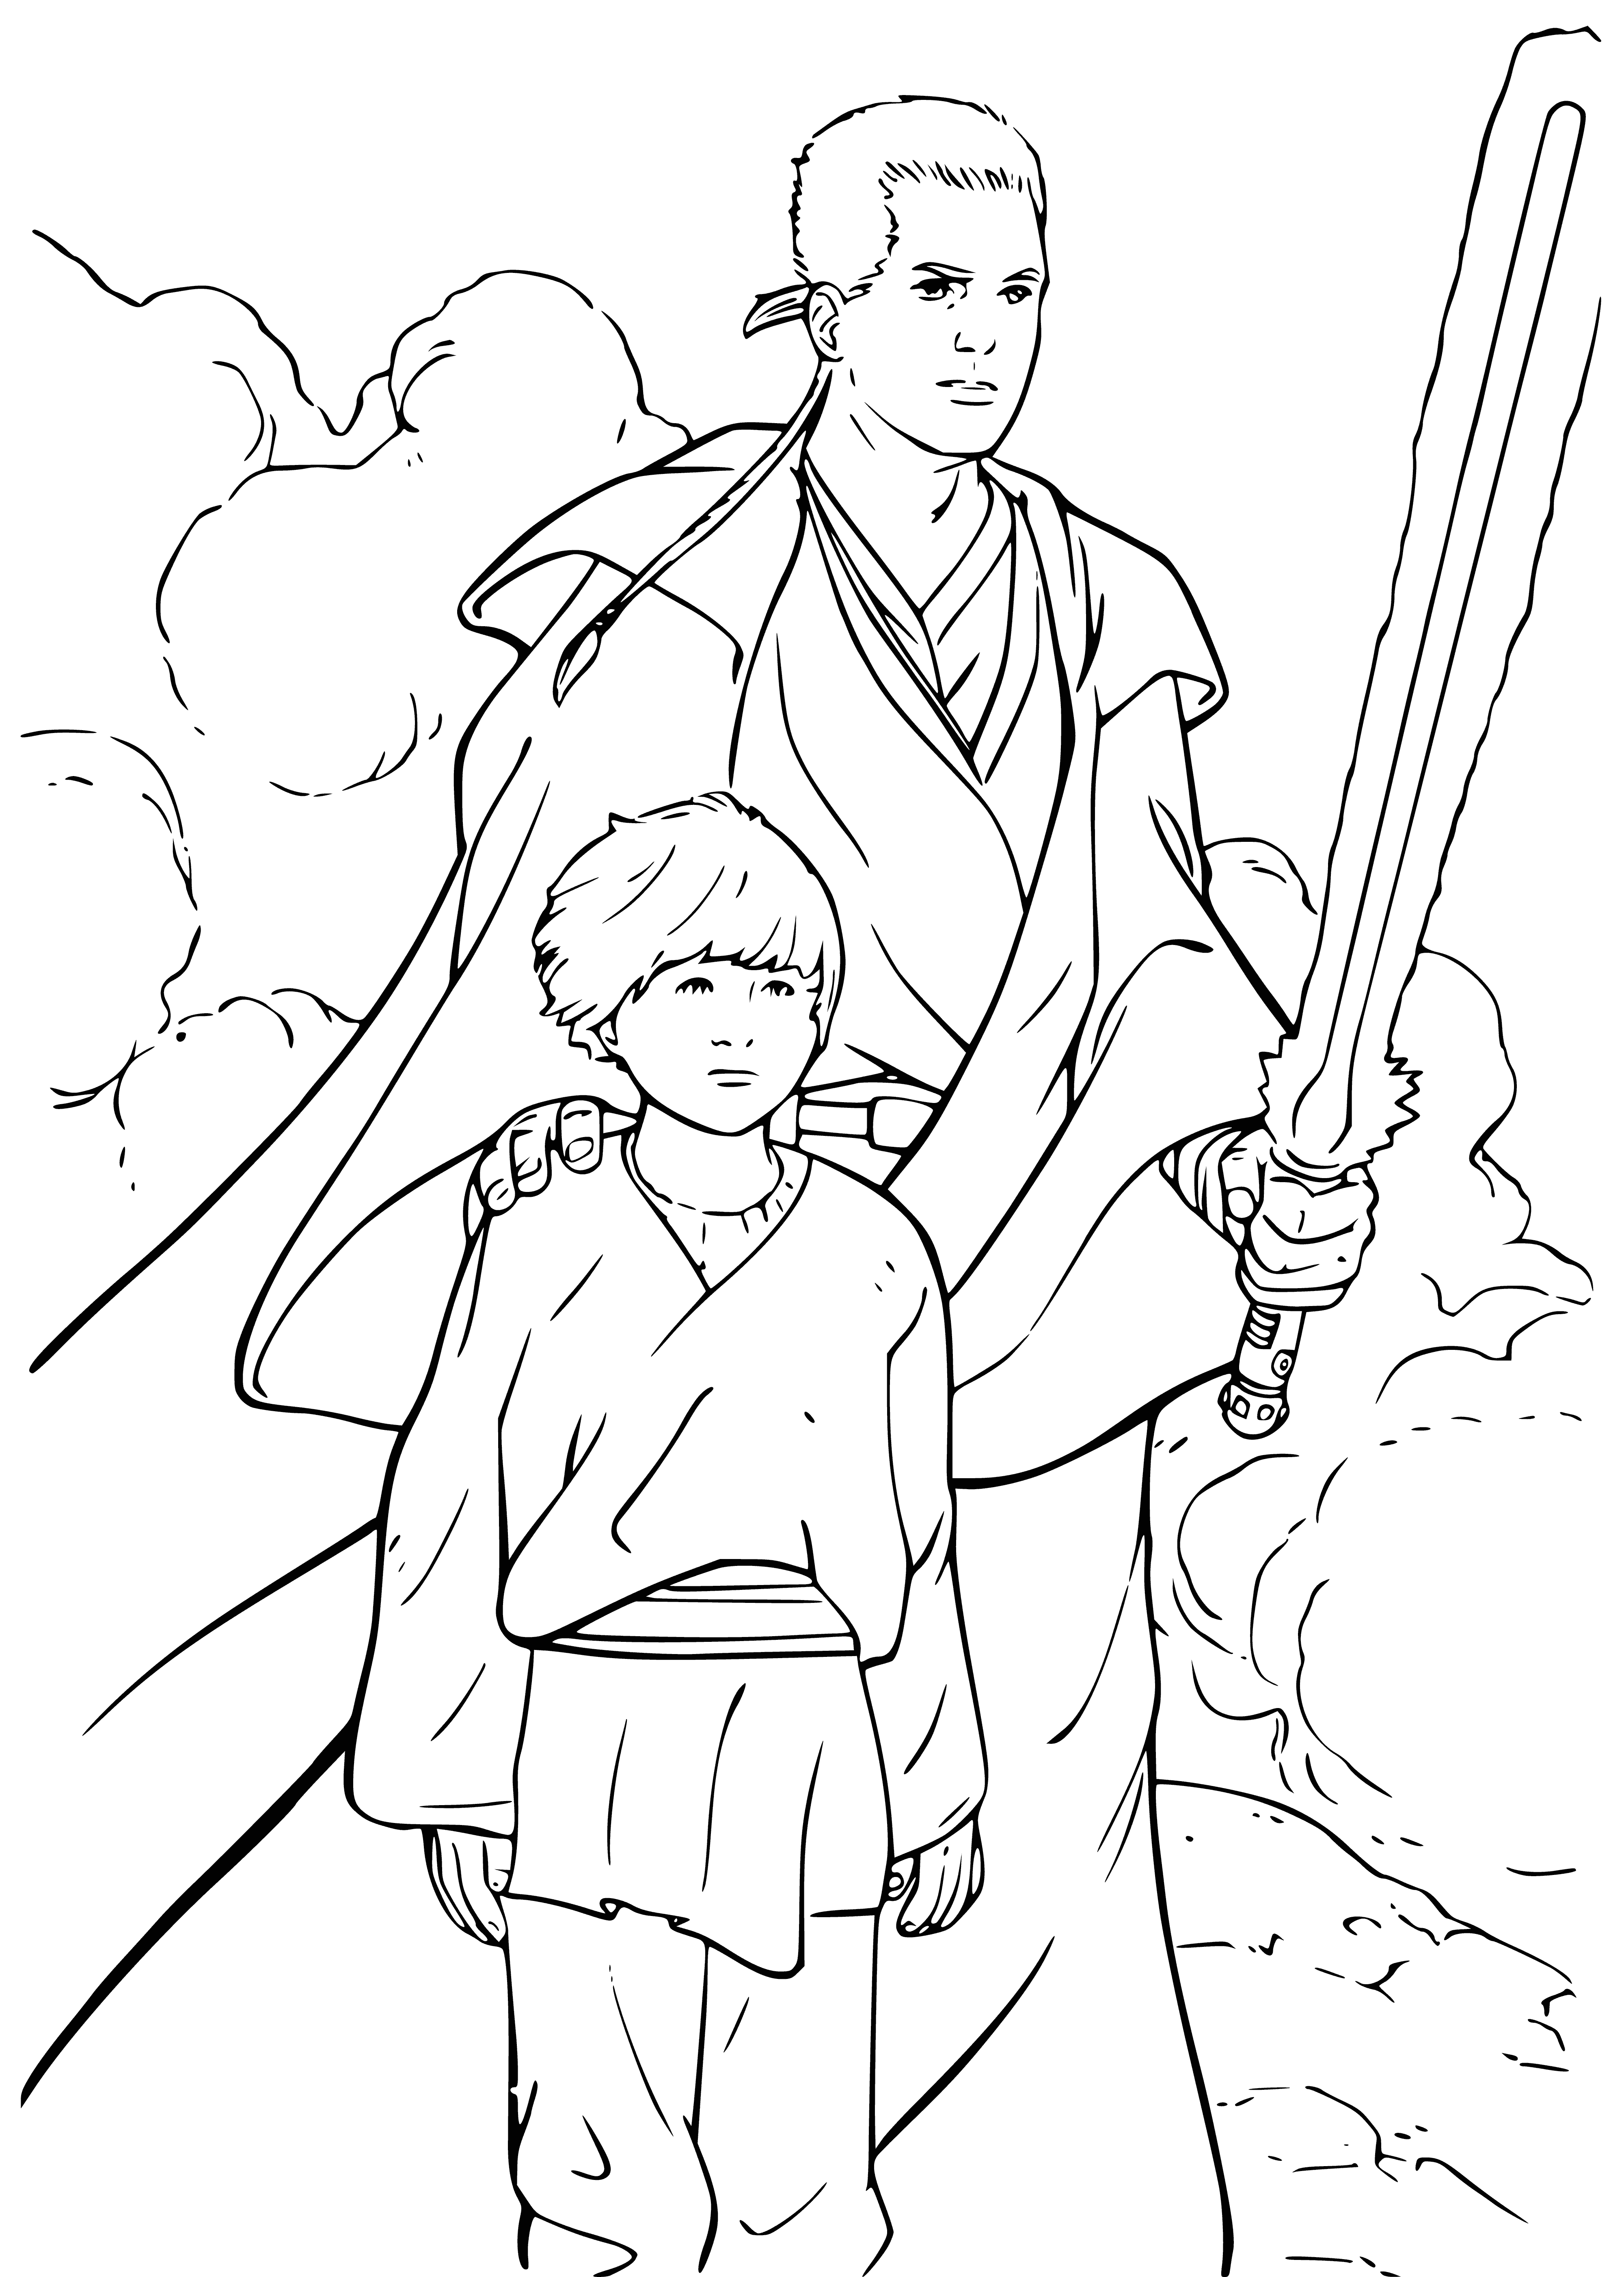 Obi-Wan Kenobi and Anakin Skywalker coloring page